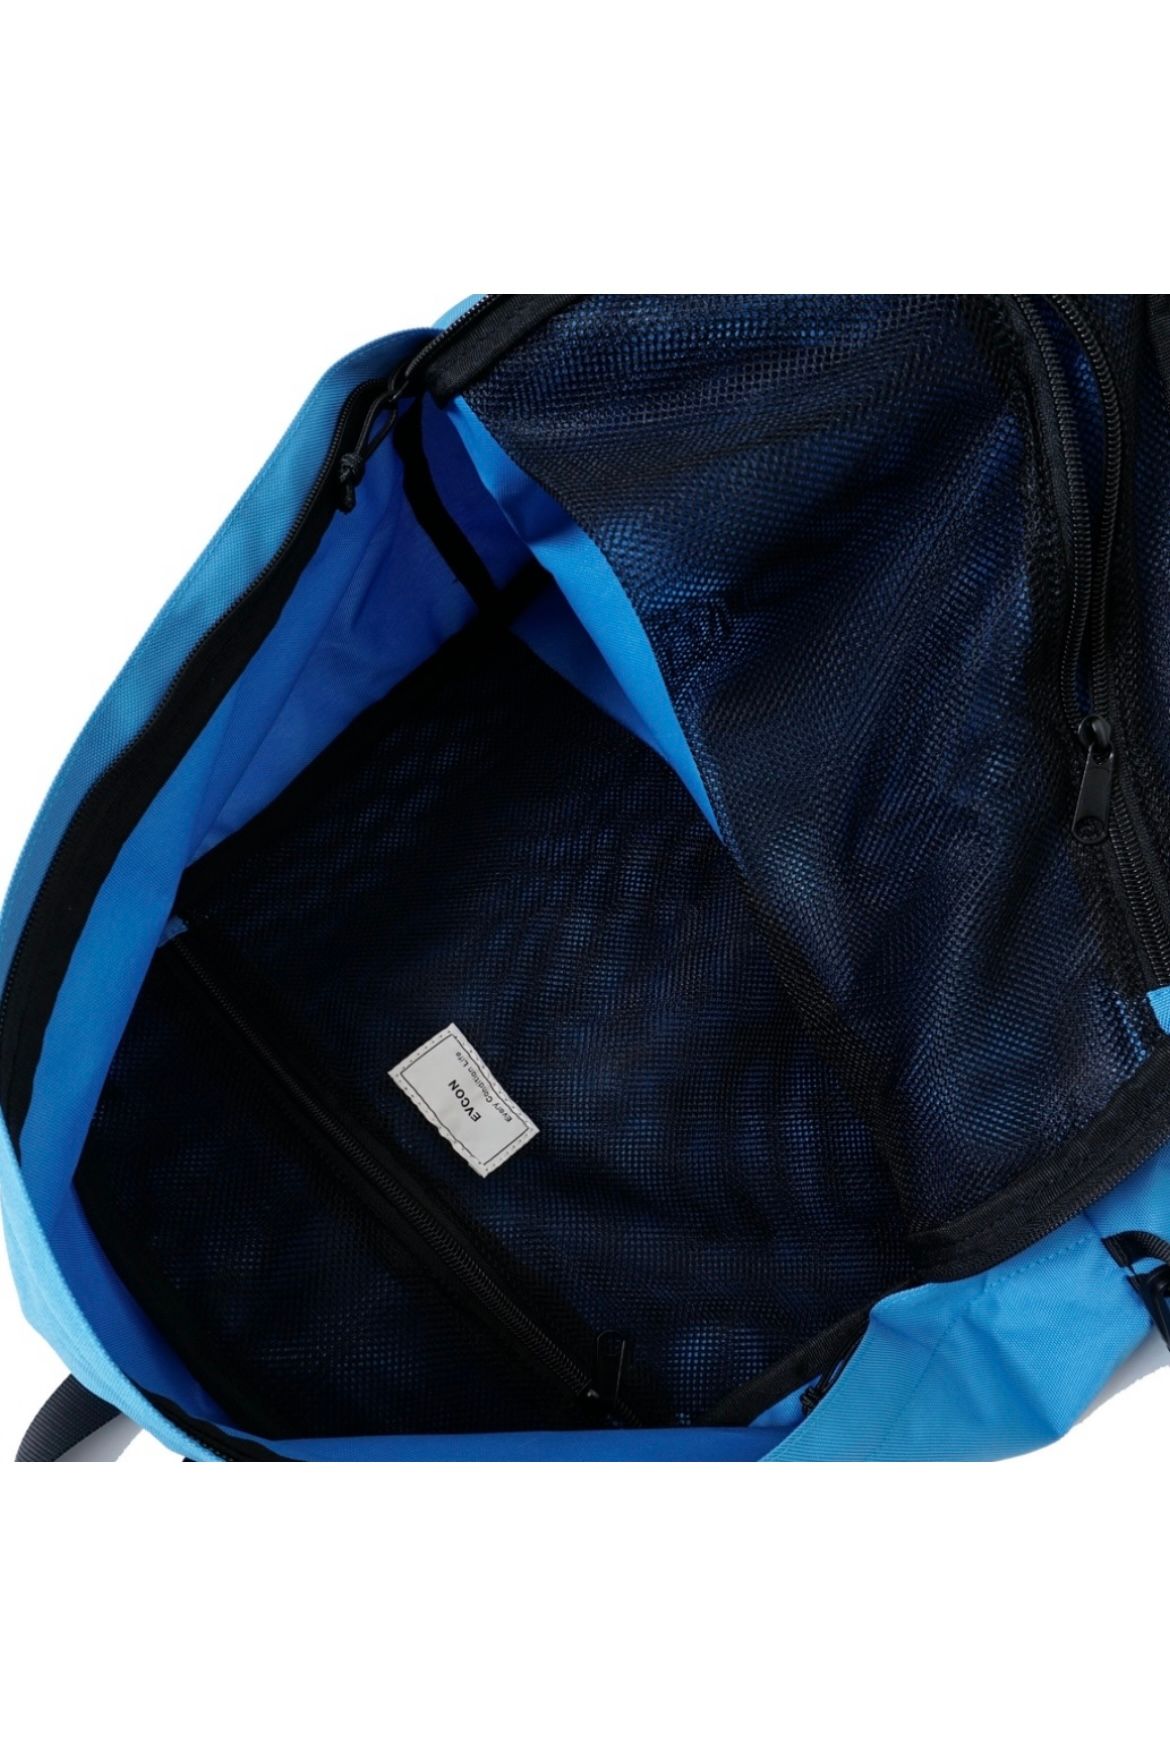 EVCON - 【予約商品】n/oridinary daypack -blue-22aw-8月下旬頃入荷 